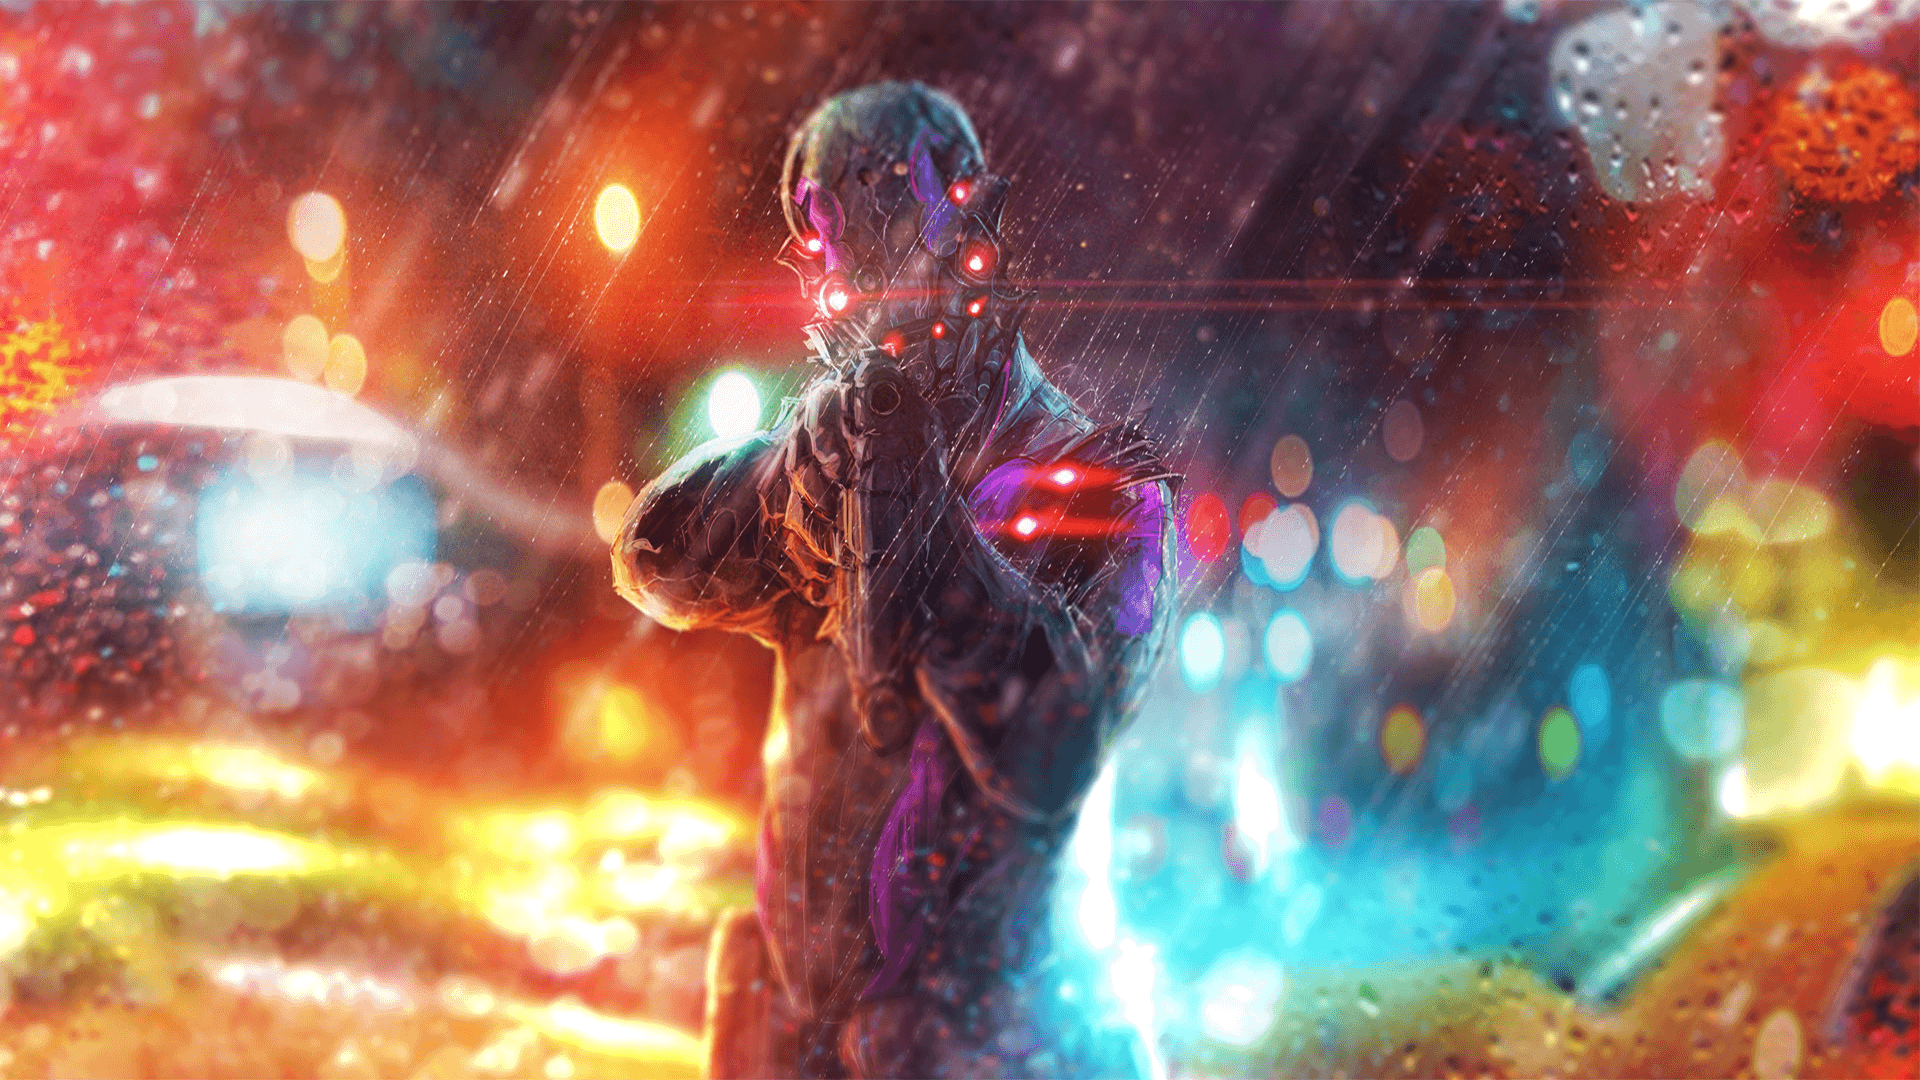 Cyberpunk Girl In Rain Wallpapers